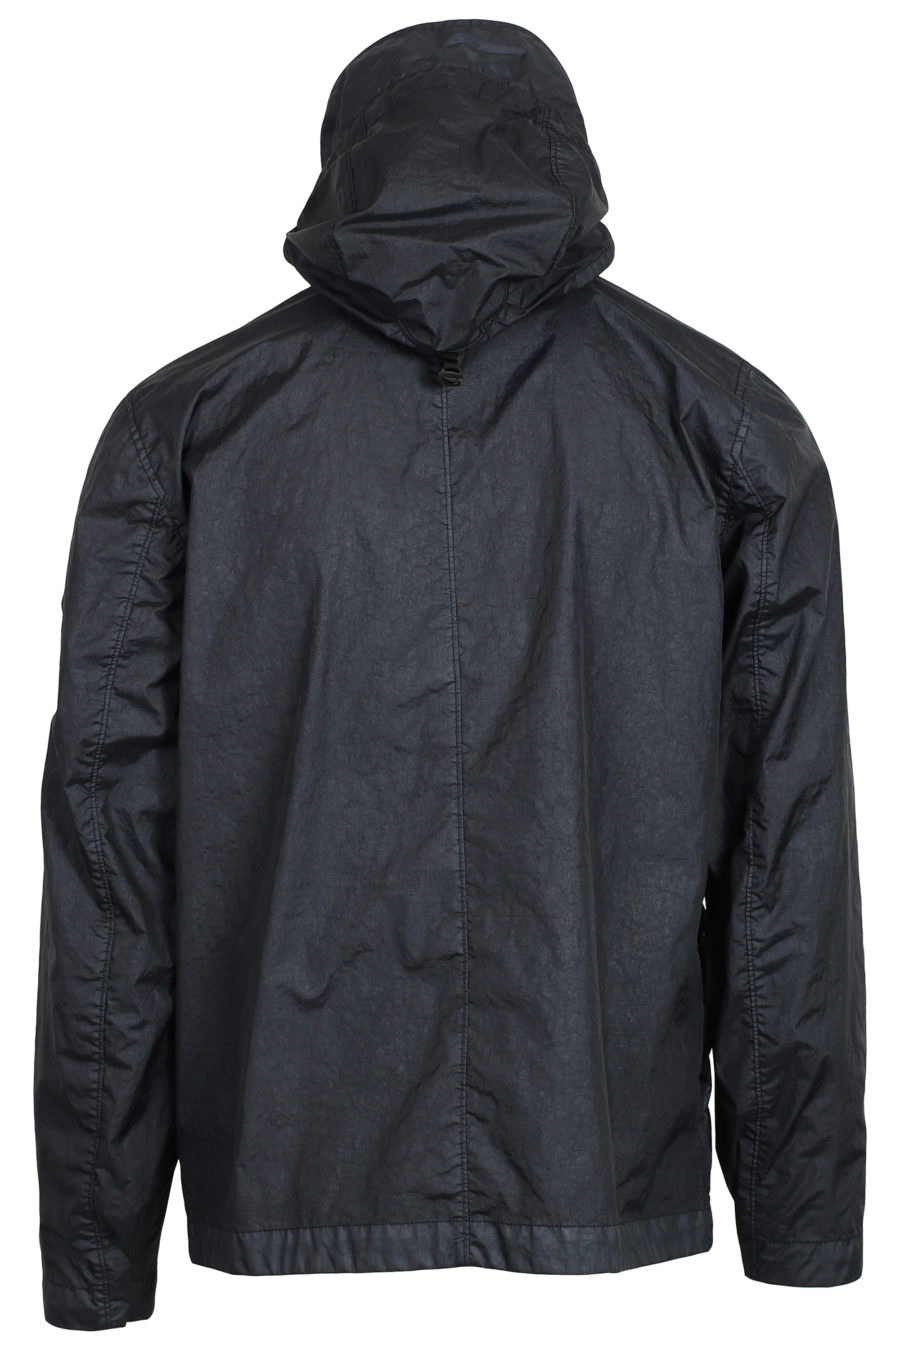 Blue jacket with hood - IMG 3696